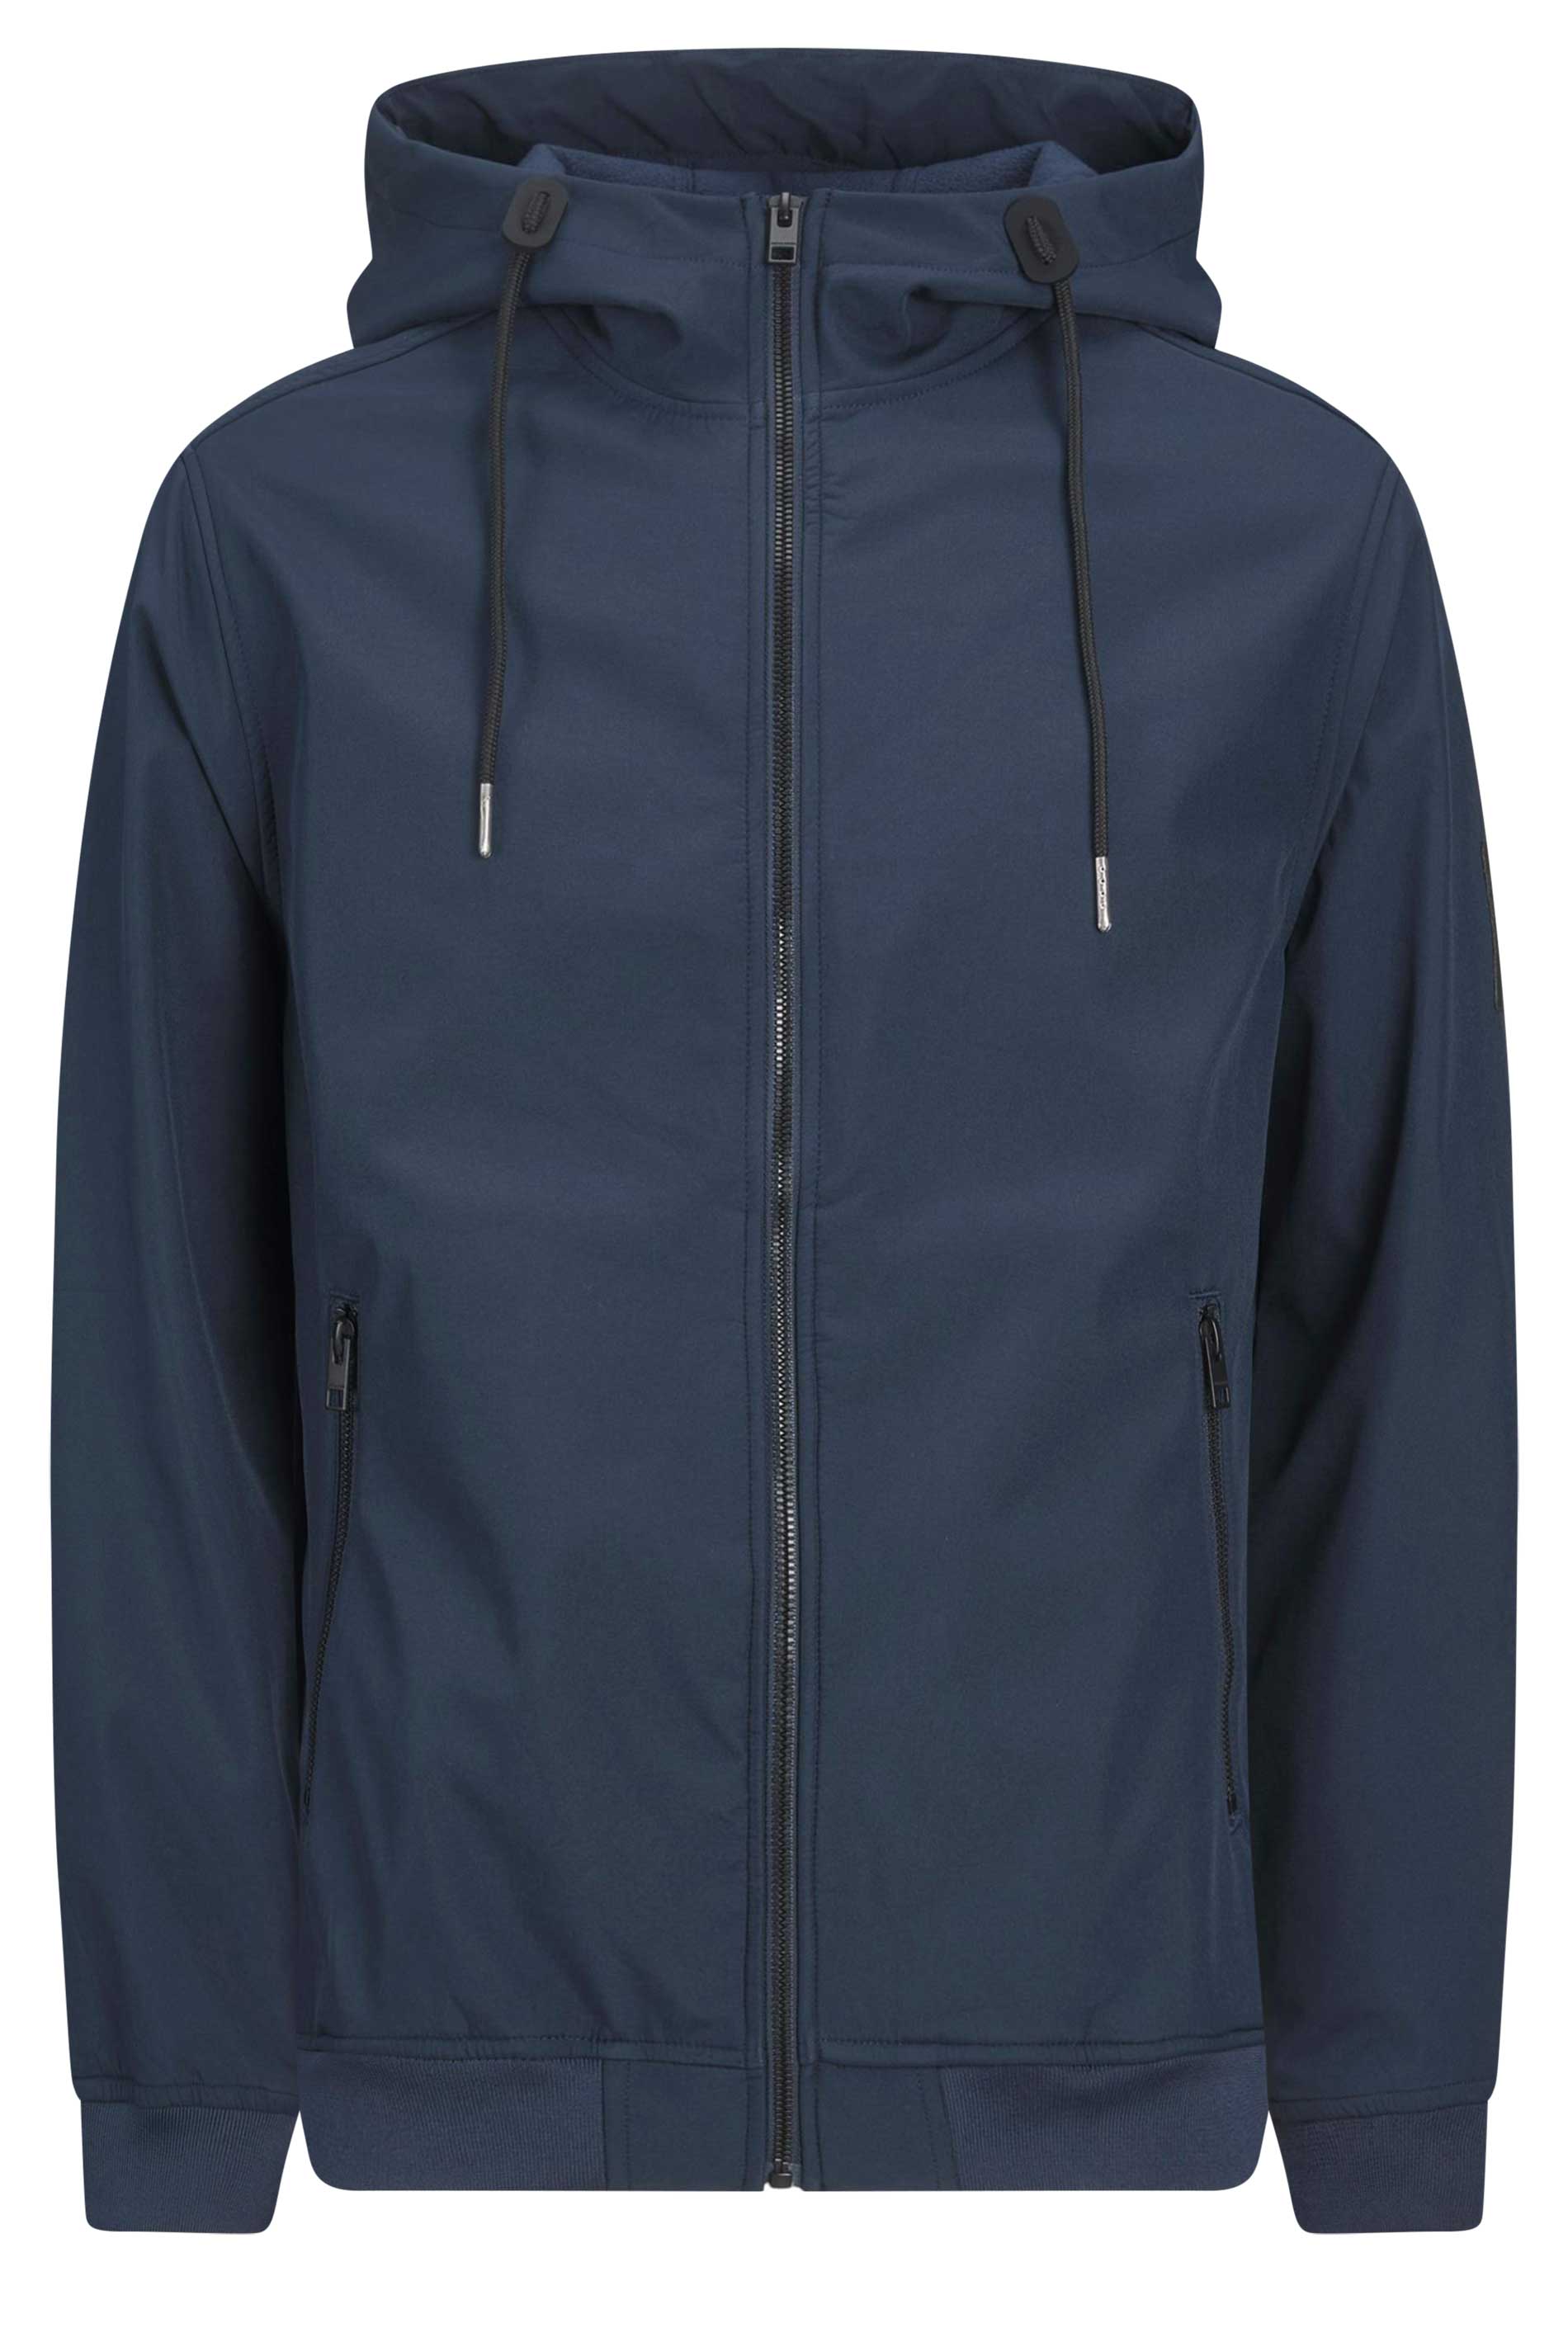 JACK & JONES Big & Tall Navy Blue Softshell Hooded Jacket | BadRhino 2